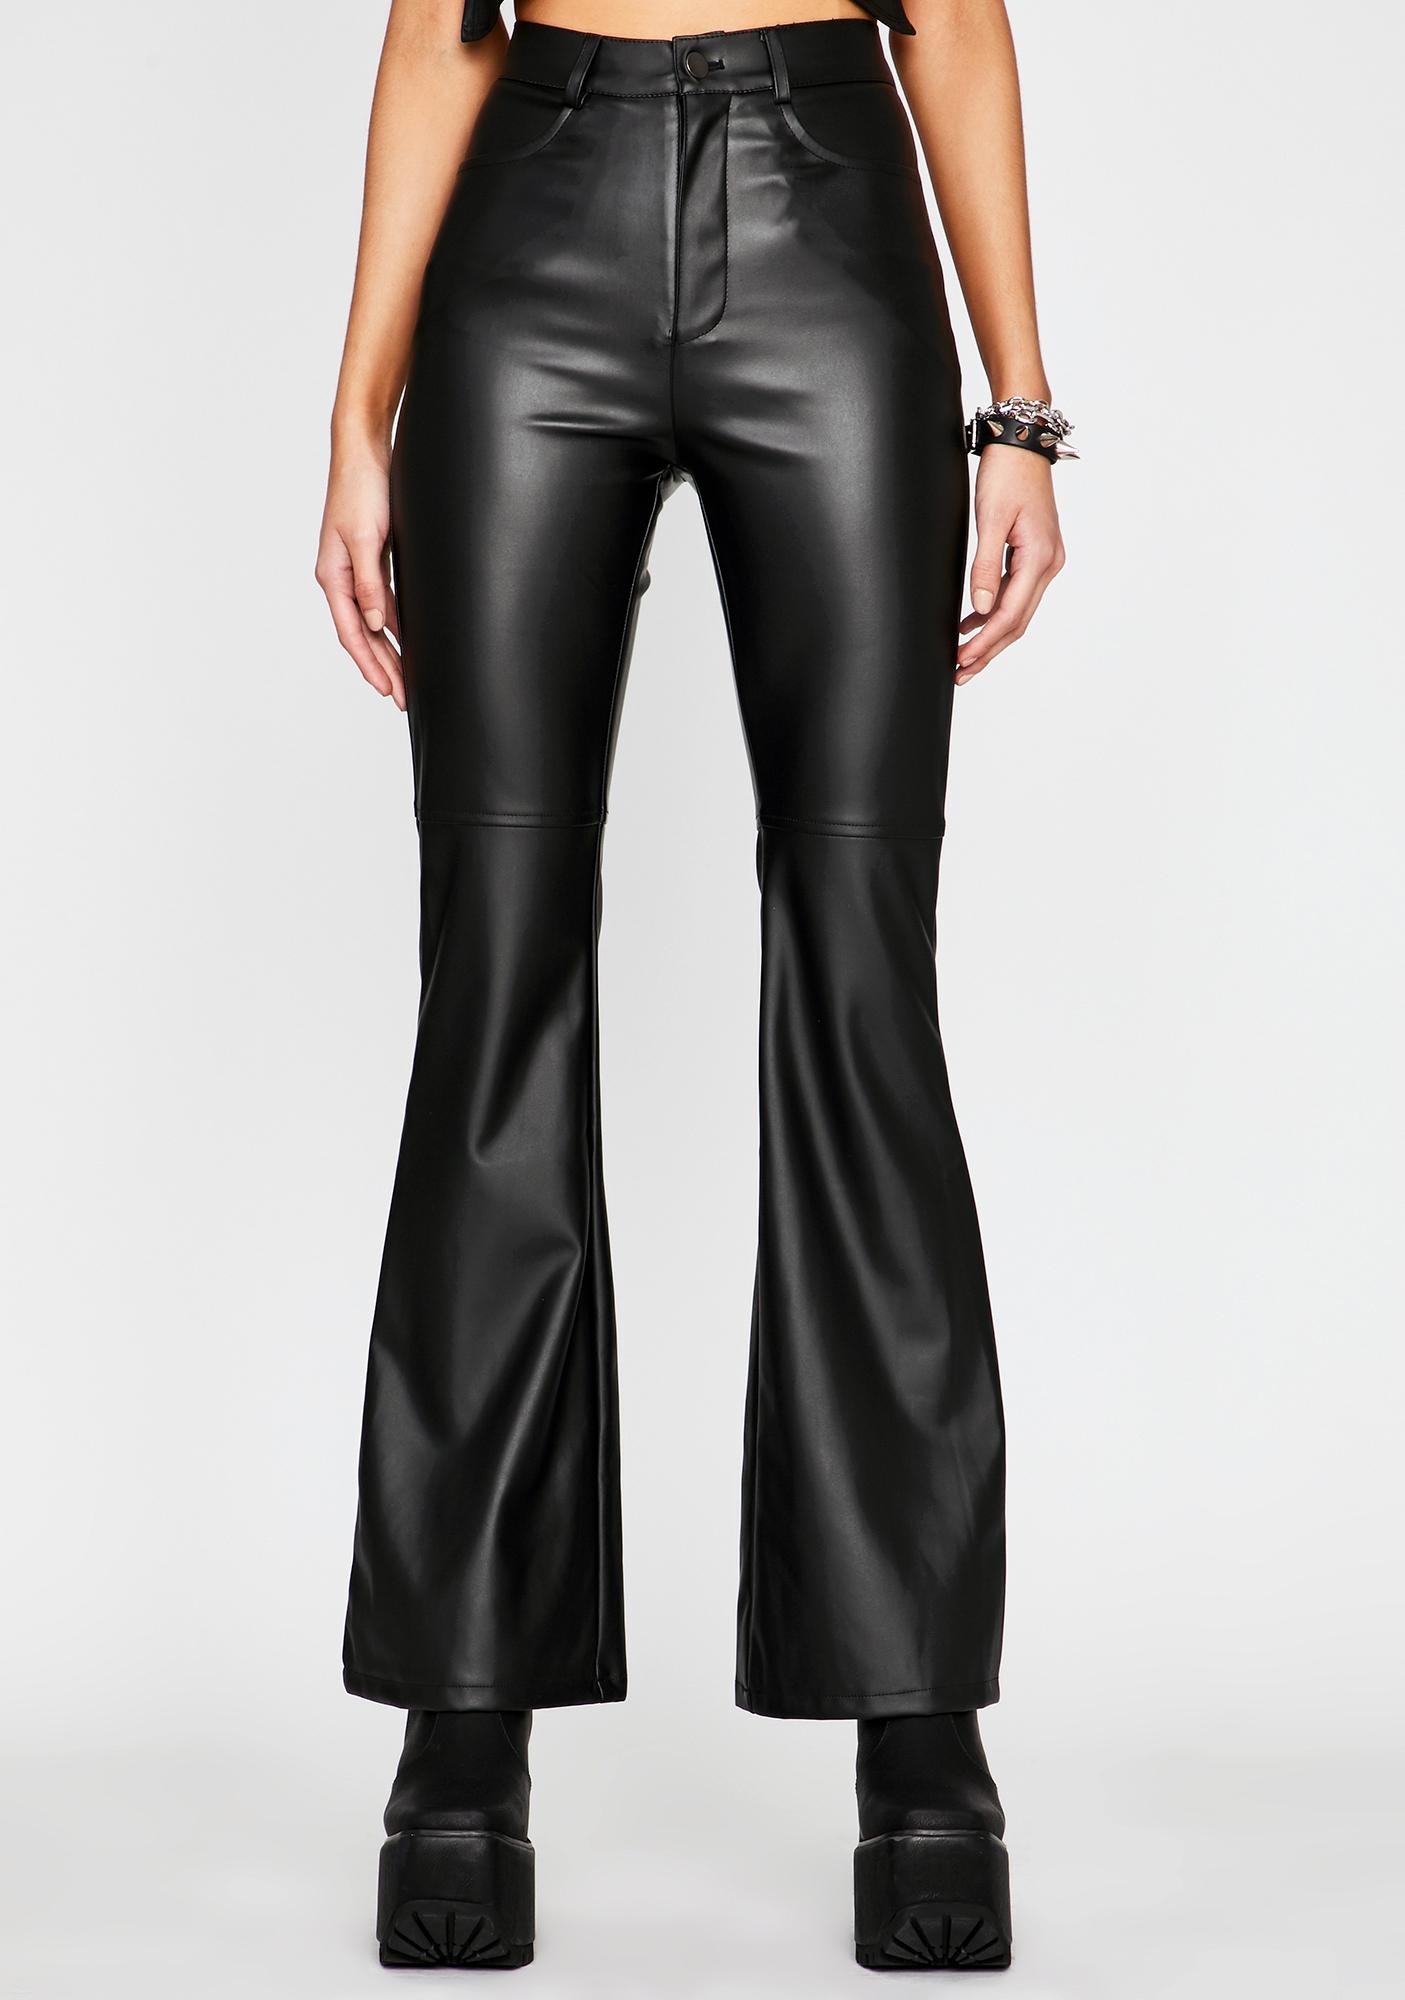 black leather flare pants